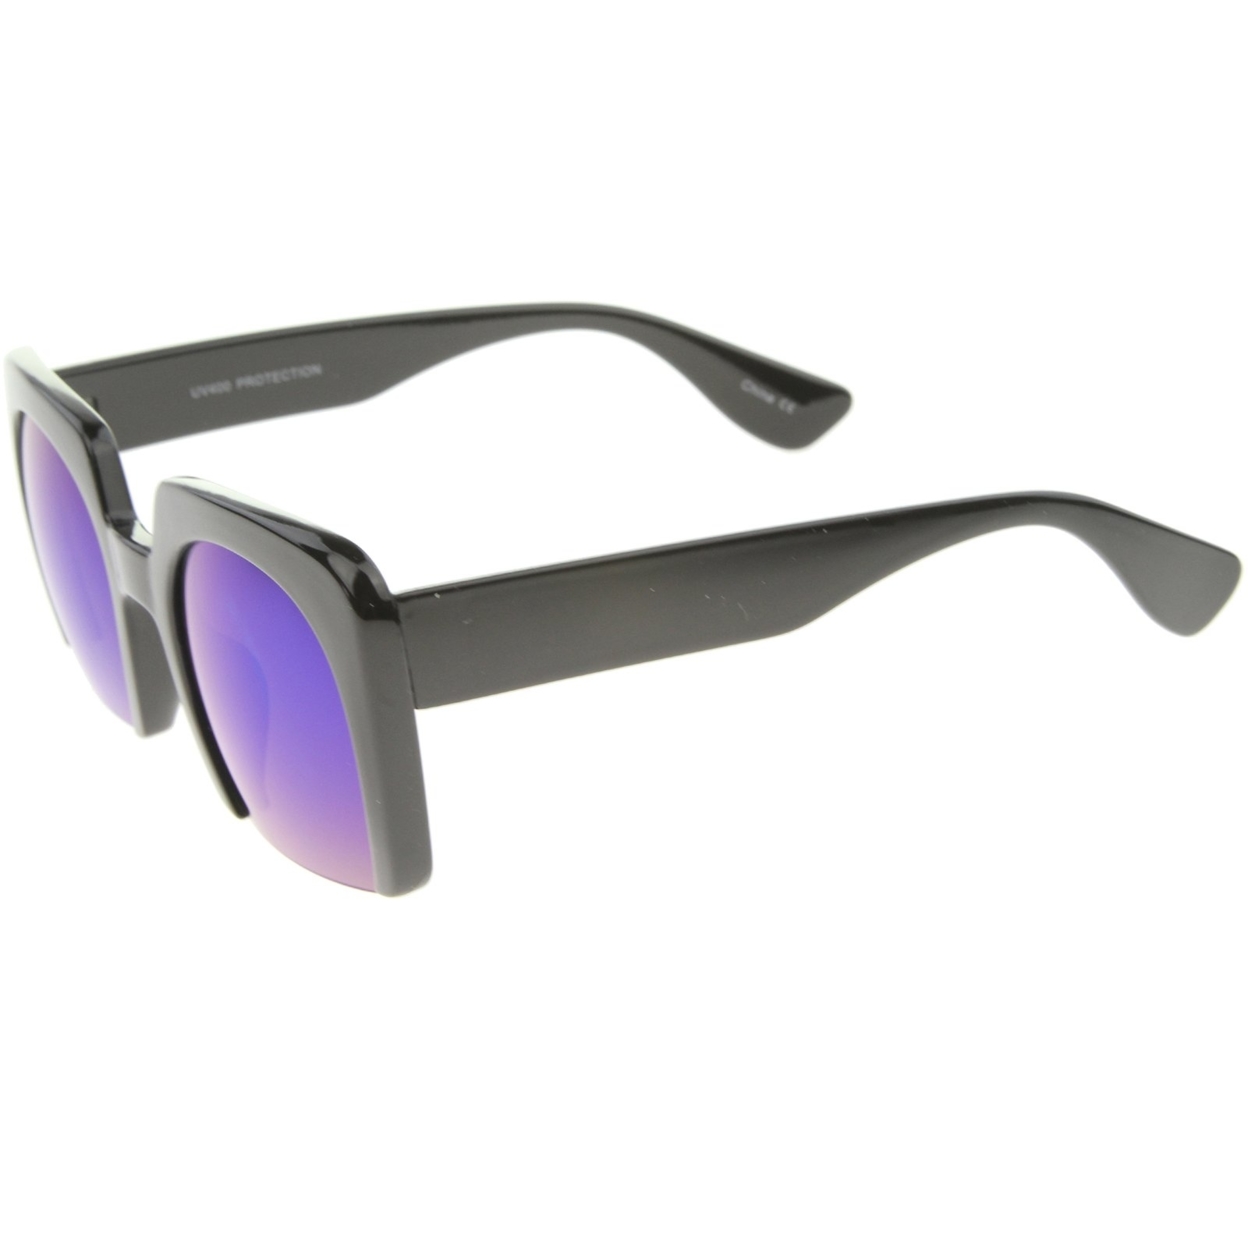 Women's High Fashion Bold Bottom Cut Square Mirrored Lens Sunglasses 52mm - Matte Black / Silver Mirror